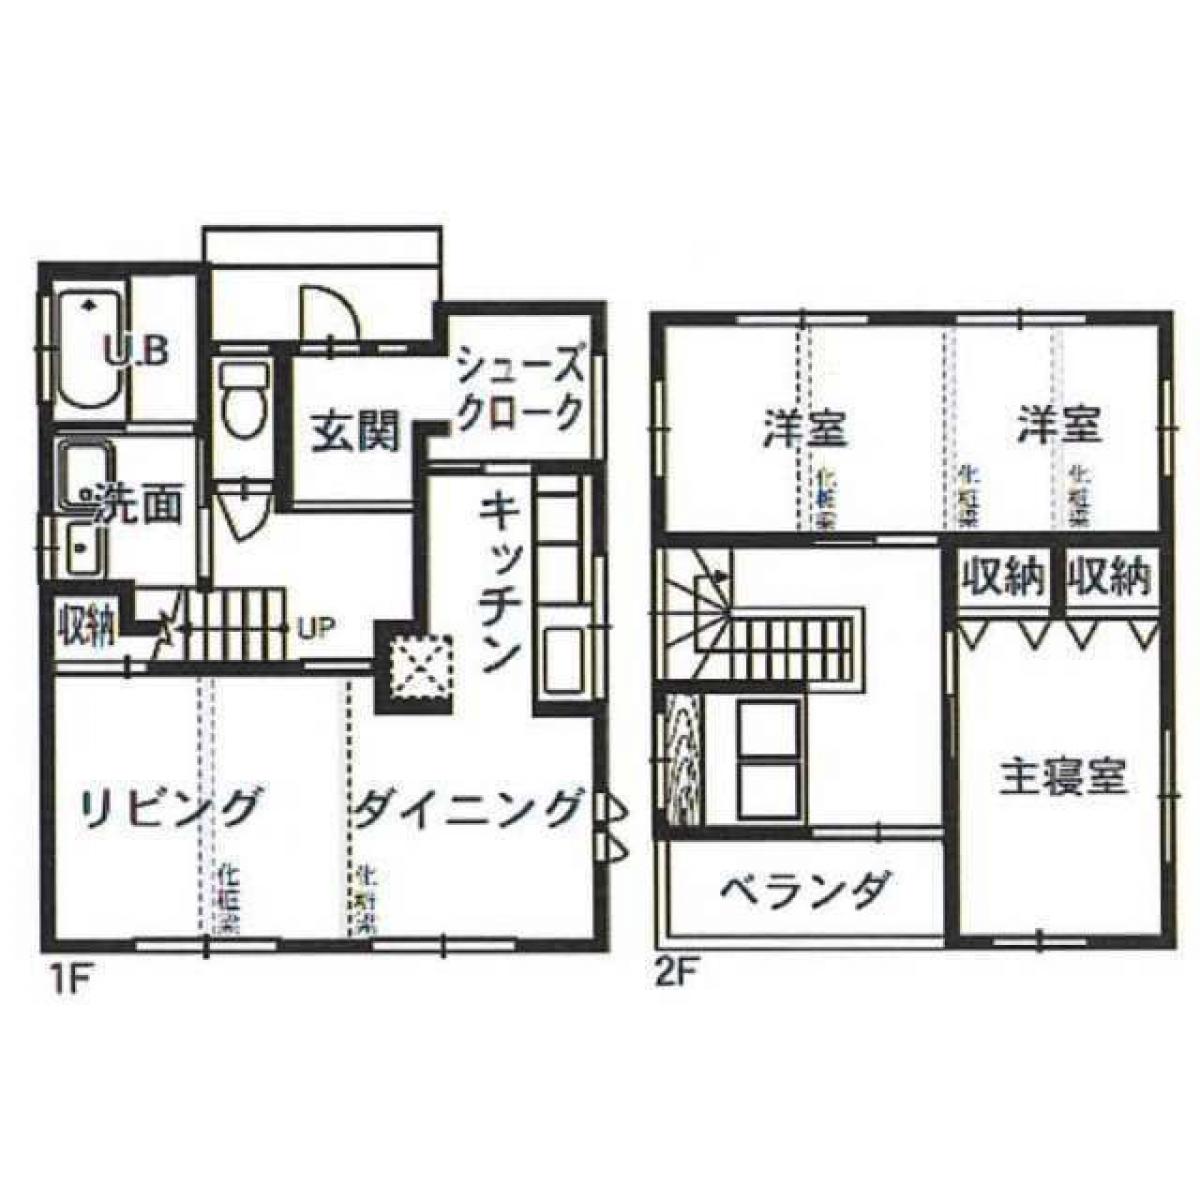 Picture of Home For Sale in Hamamatsu Shi Tenryu Ku, Shizuoka, Japan